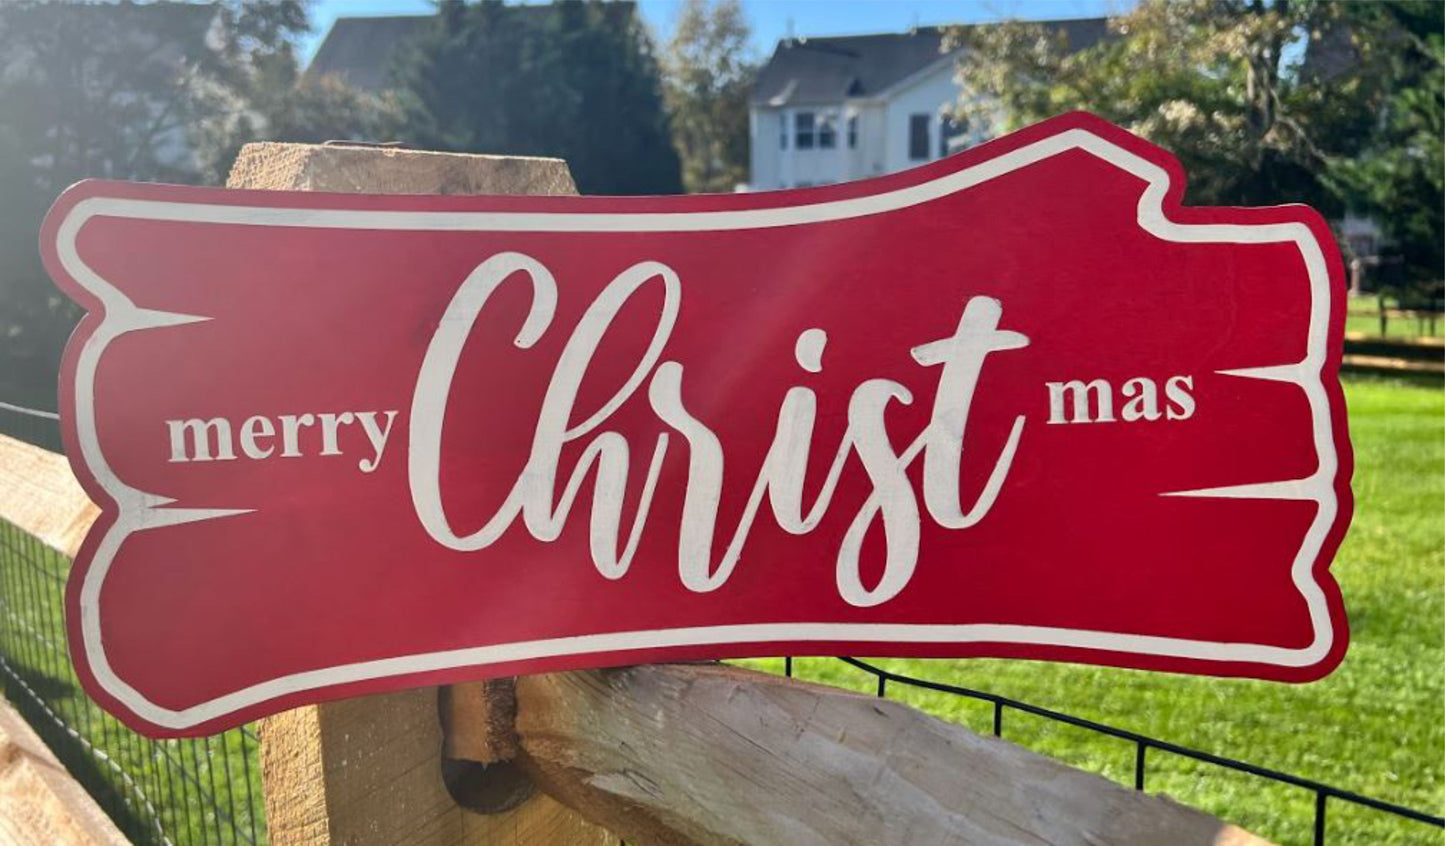 Merry CHRIST mas Custom Wood Sign 20" x 9"